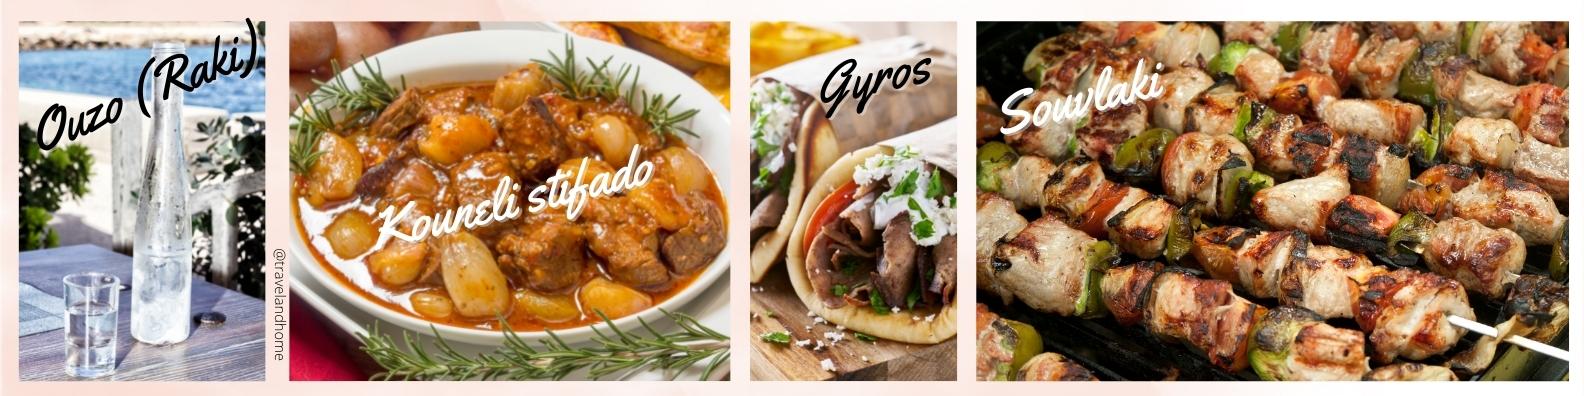 Greek Cuisine traditional Greek food and drinks ouzo gyros kouneli stifado souvlaki street food